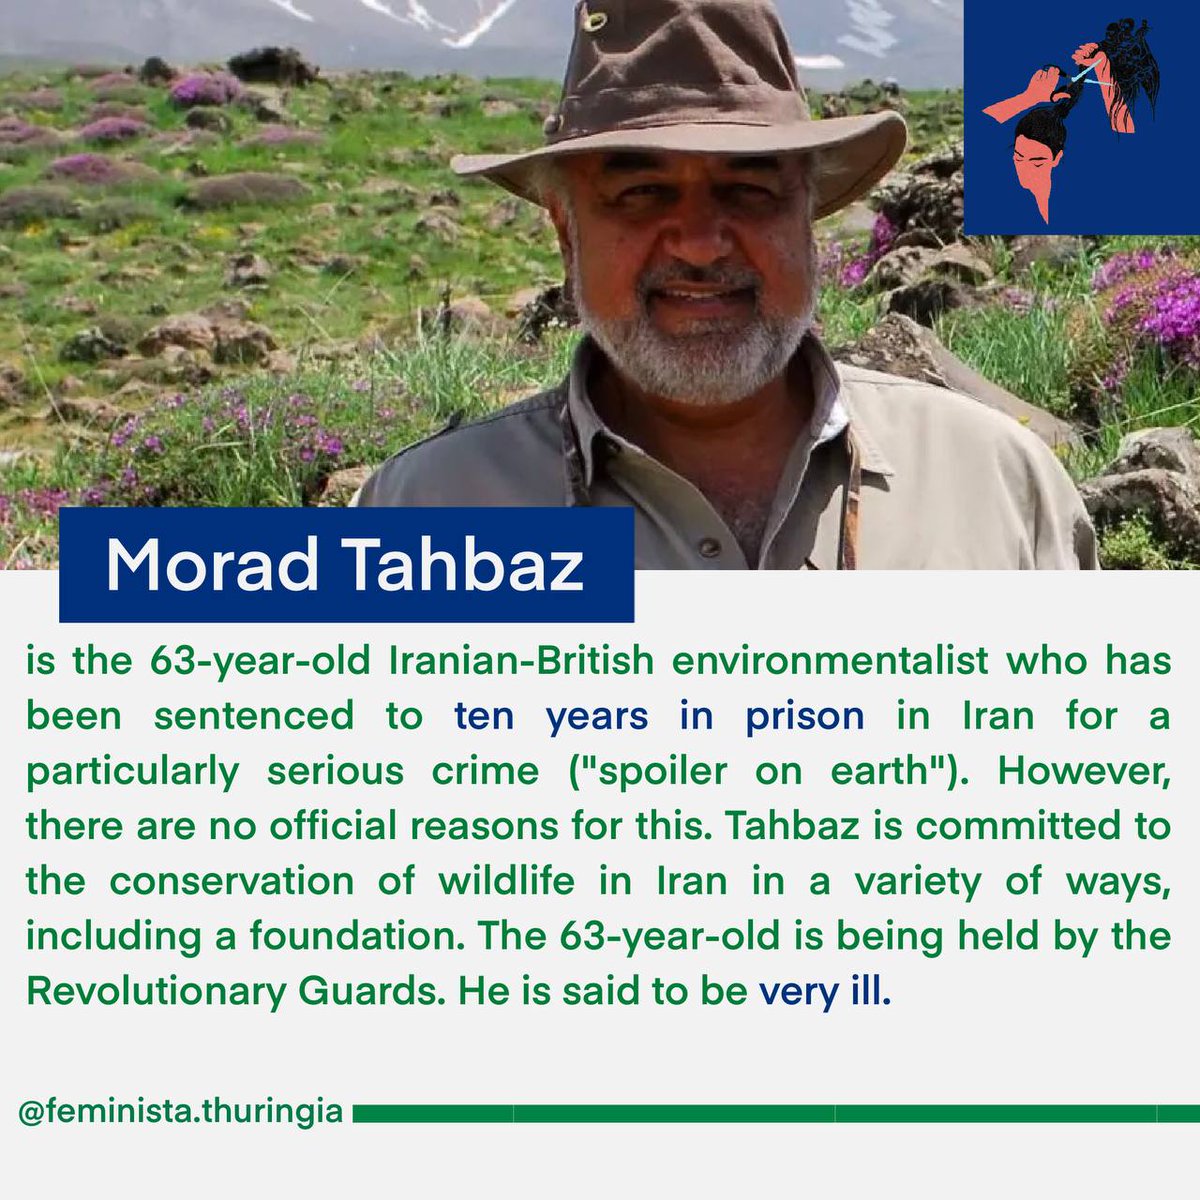 #MoradTahbaz
#مراد_طاهباز 
زندانی فعال محیط زیست، ۶۳ ساله
محکوم به ده سال حبس 
Sentenced to 10 years.